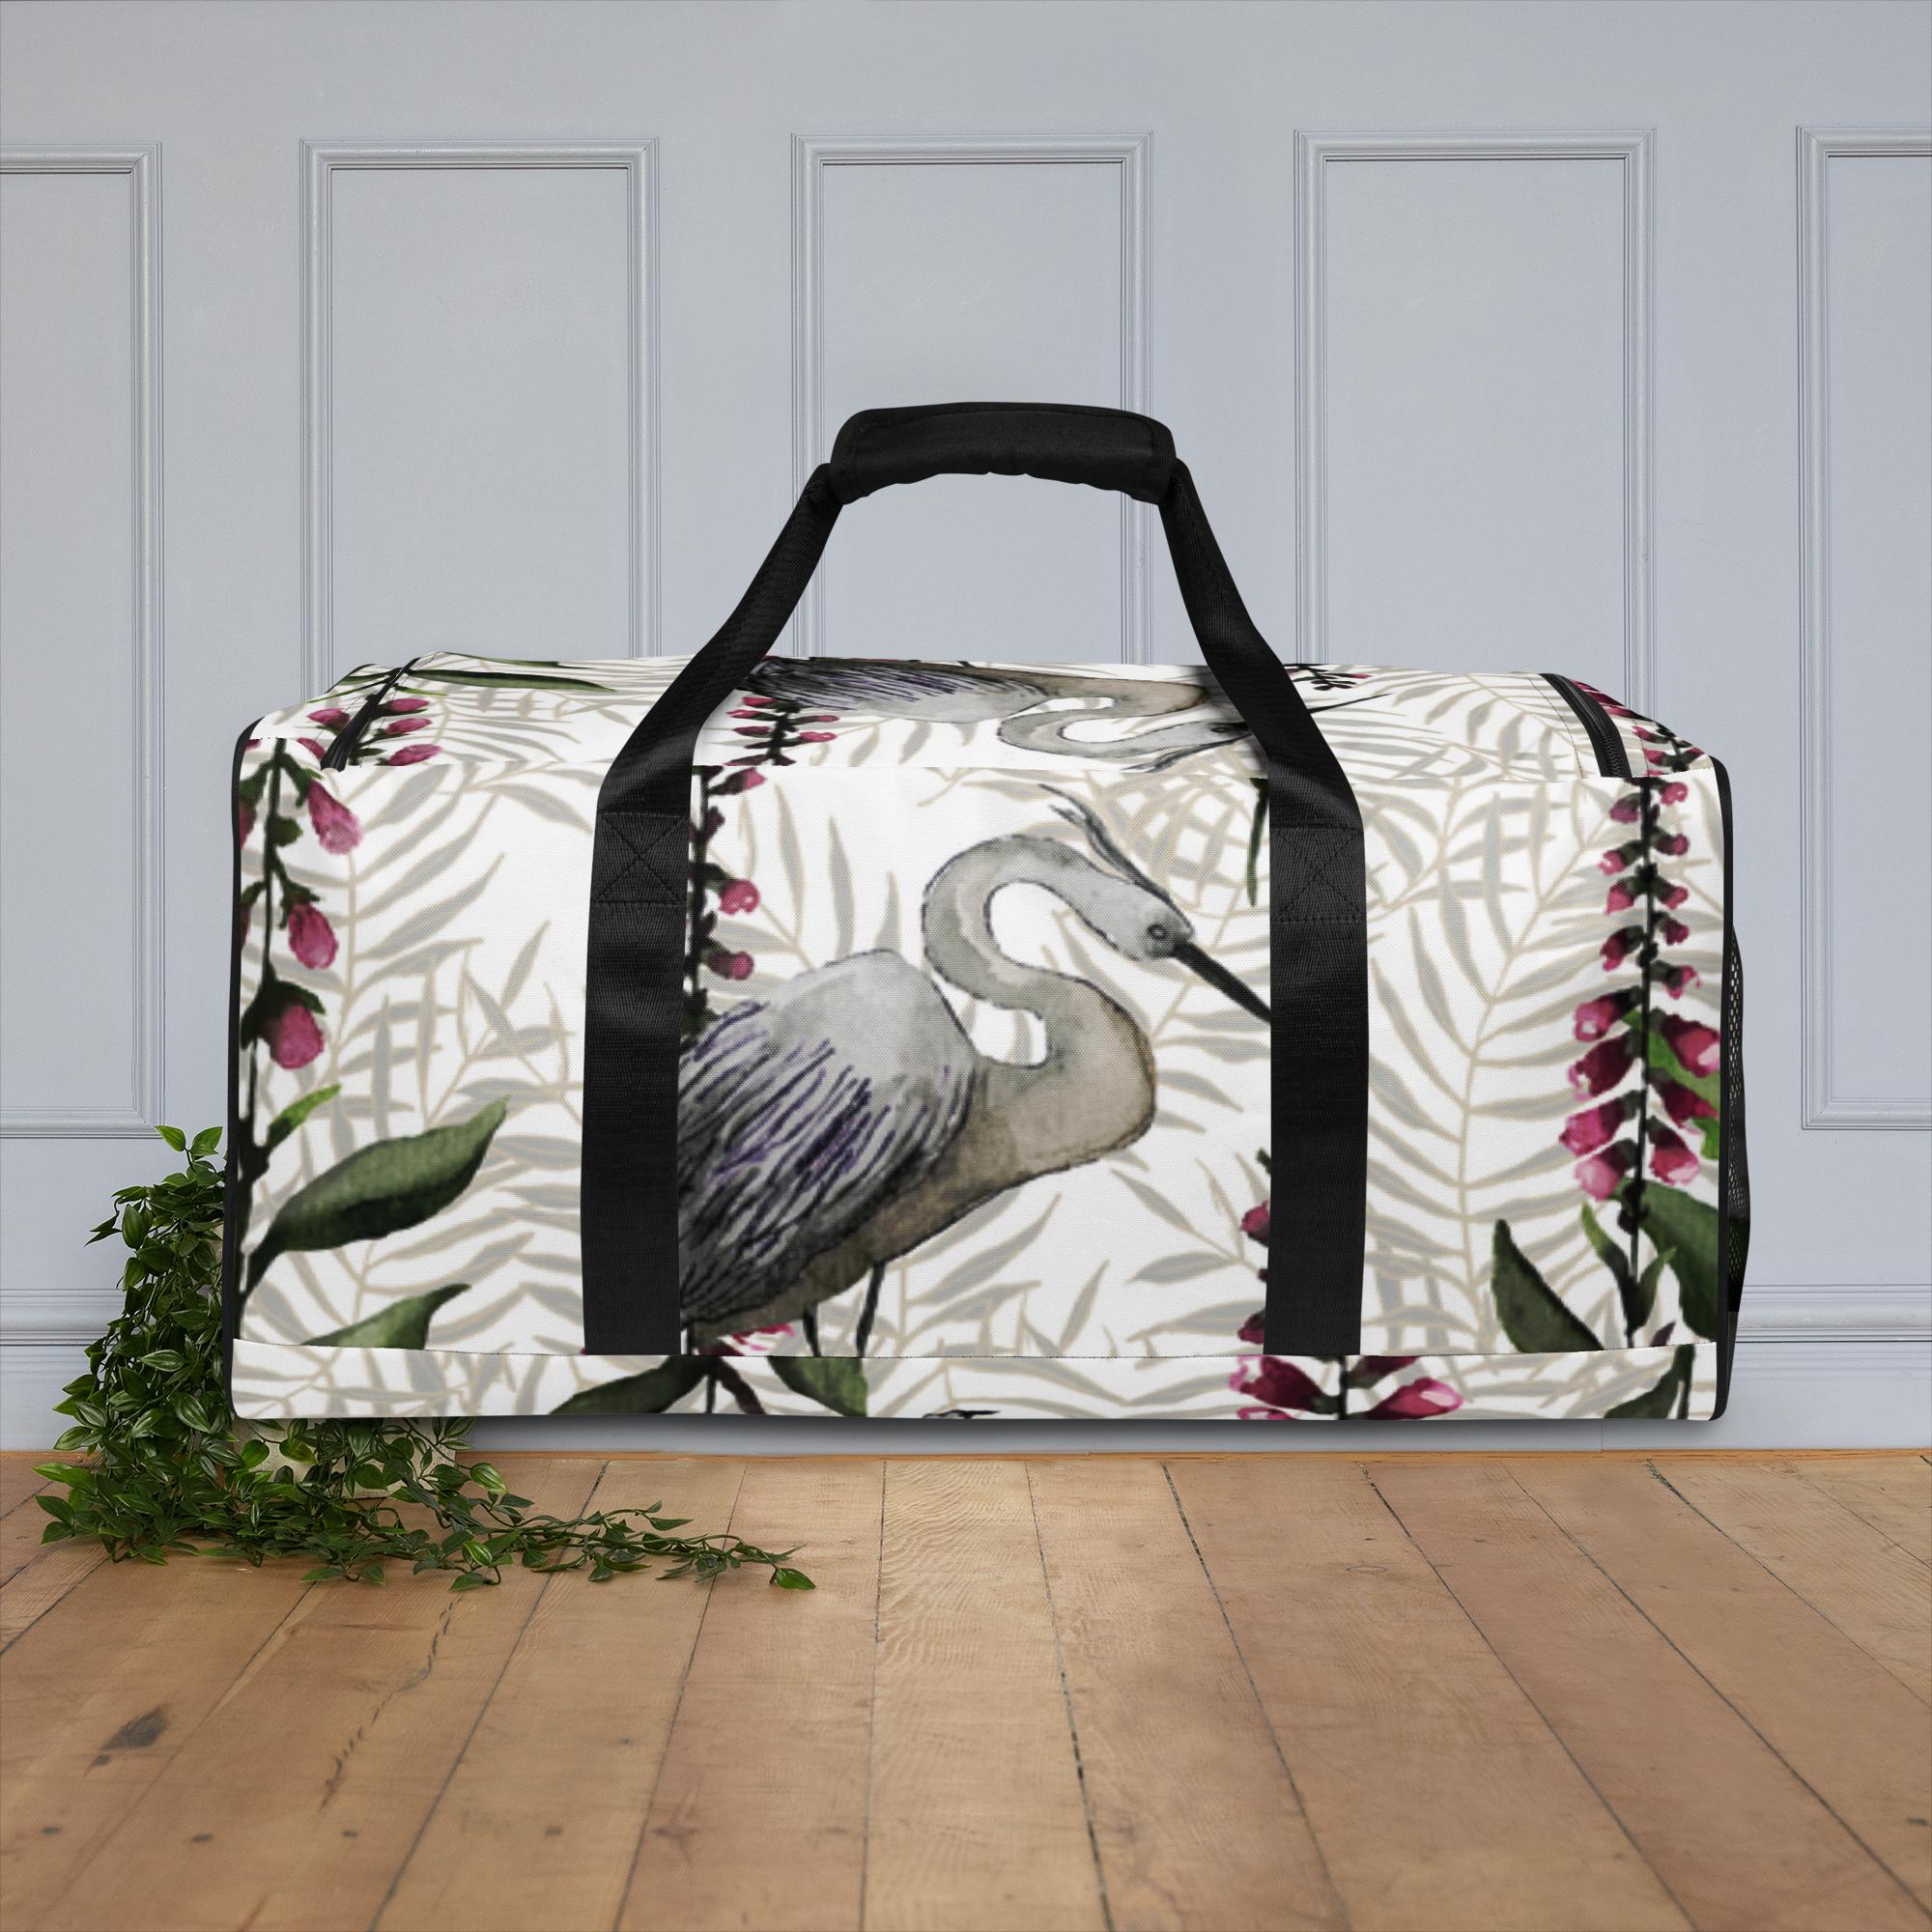 Duffle bag, Tote bag, Traveling bag, Weekender bag, Gift